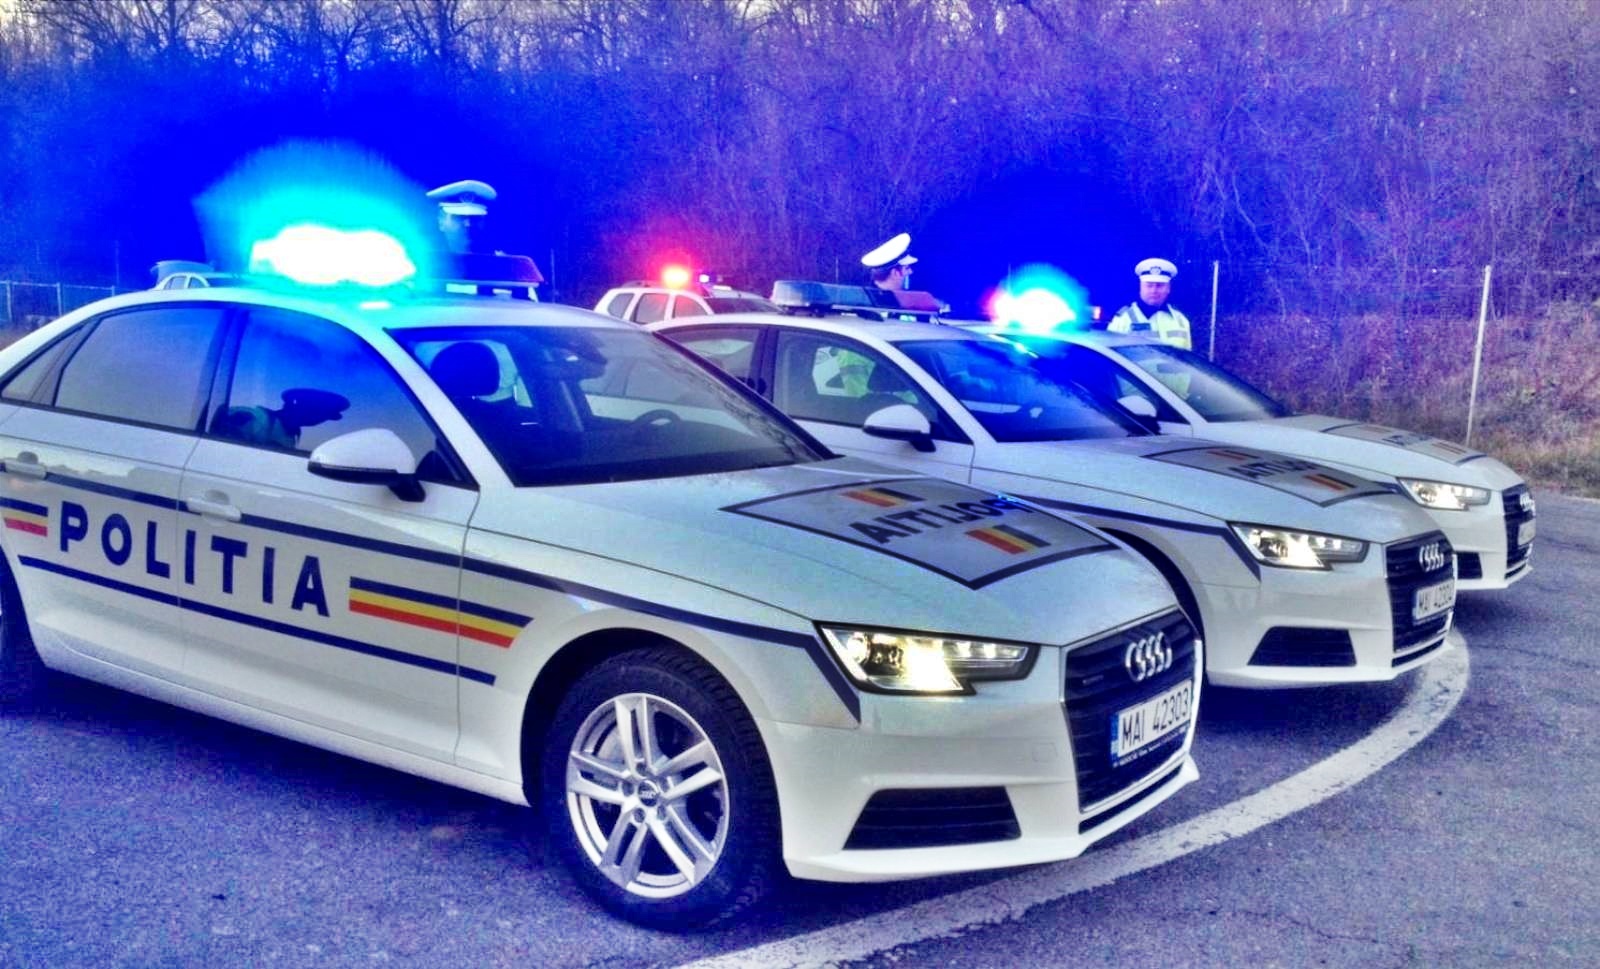 Politia Romana Masina Circuland 253 KM h Surprinsa Radar